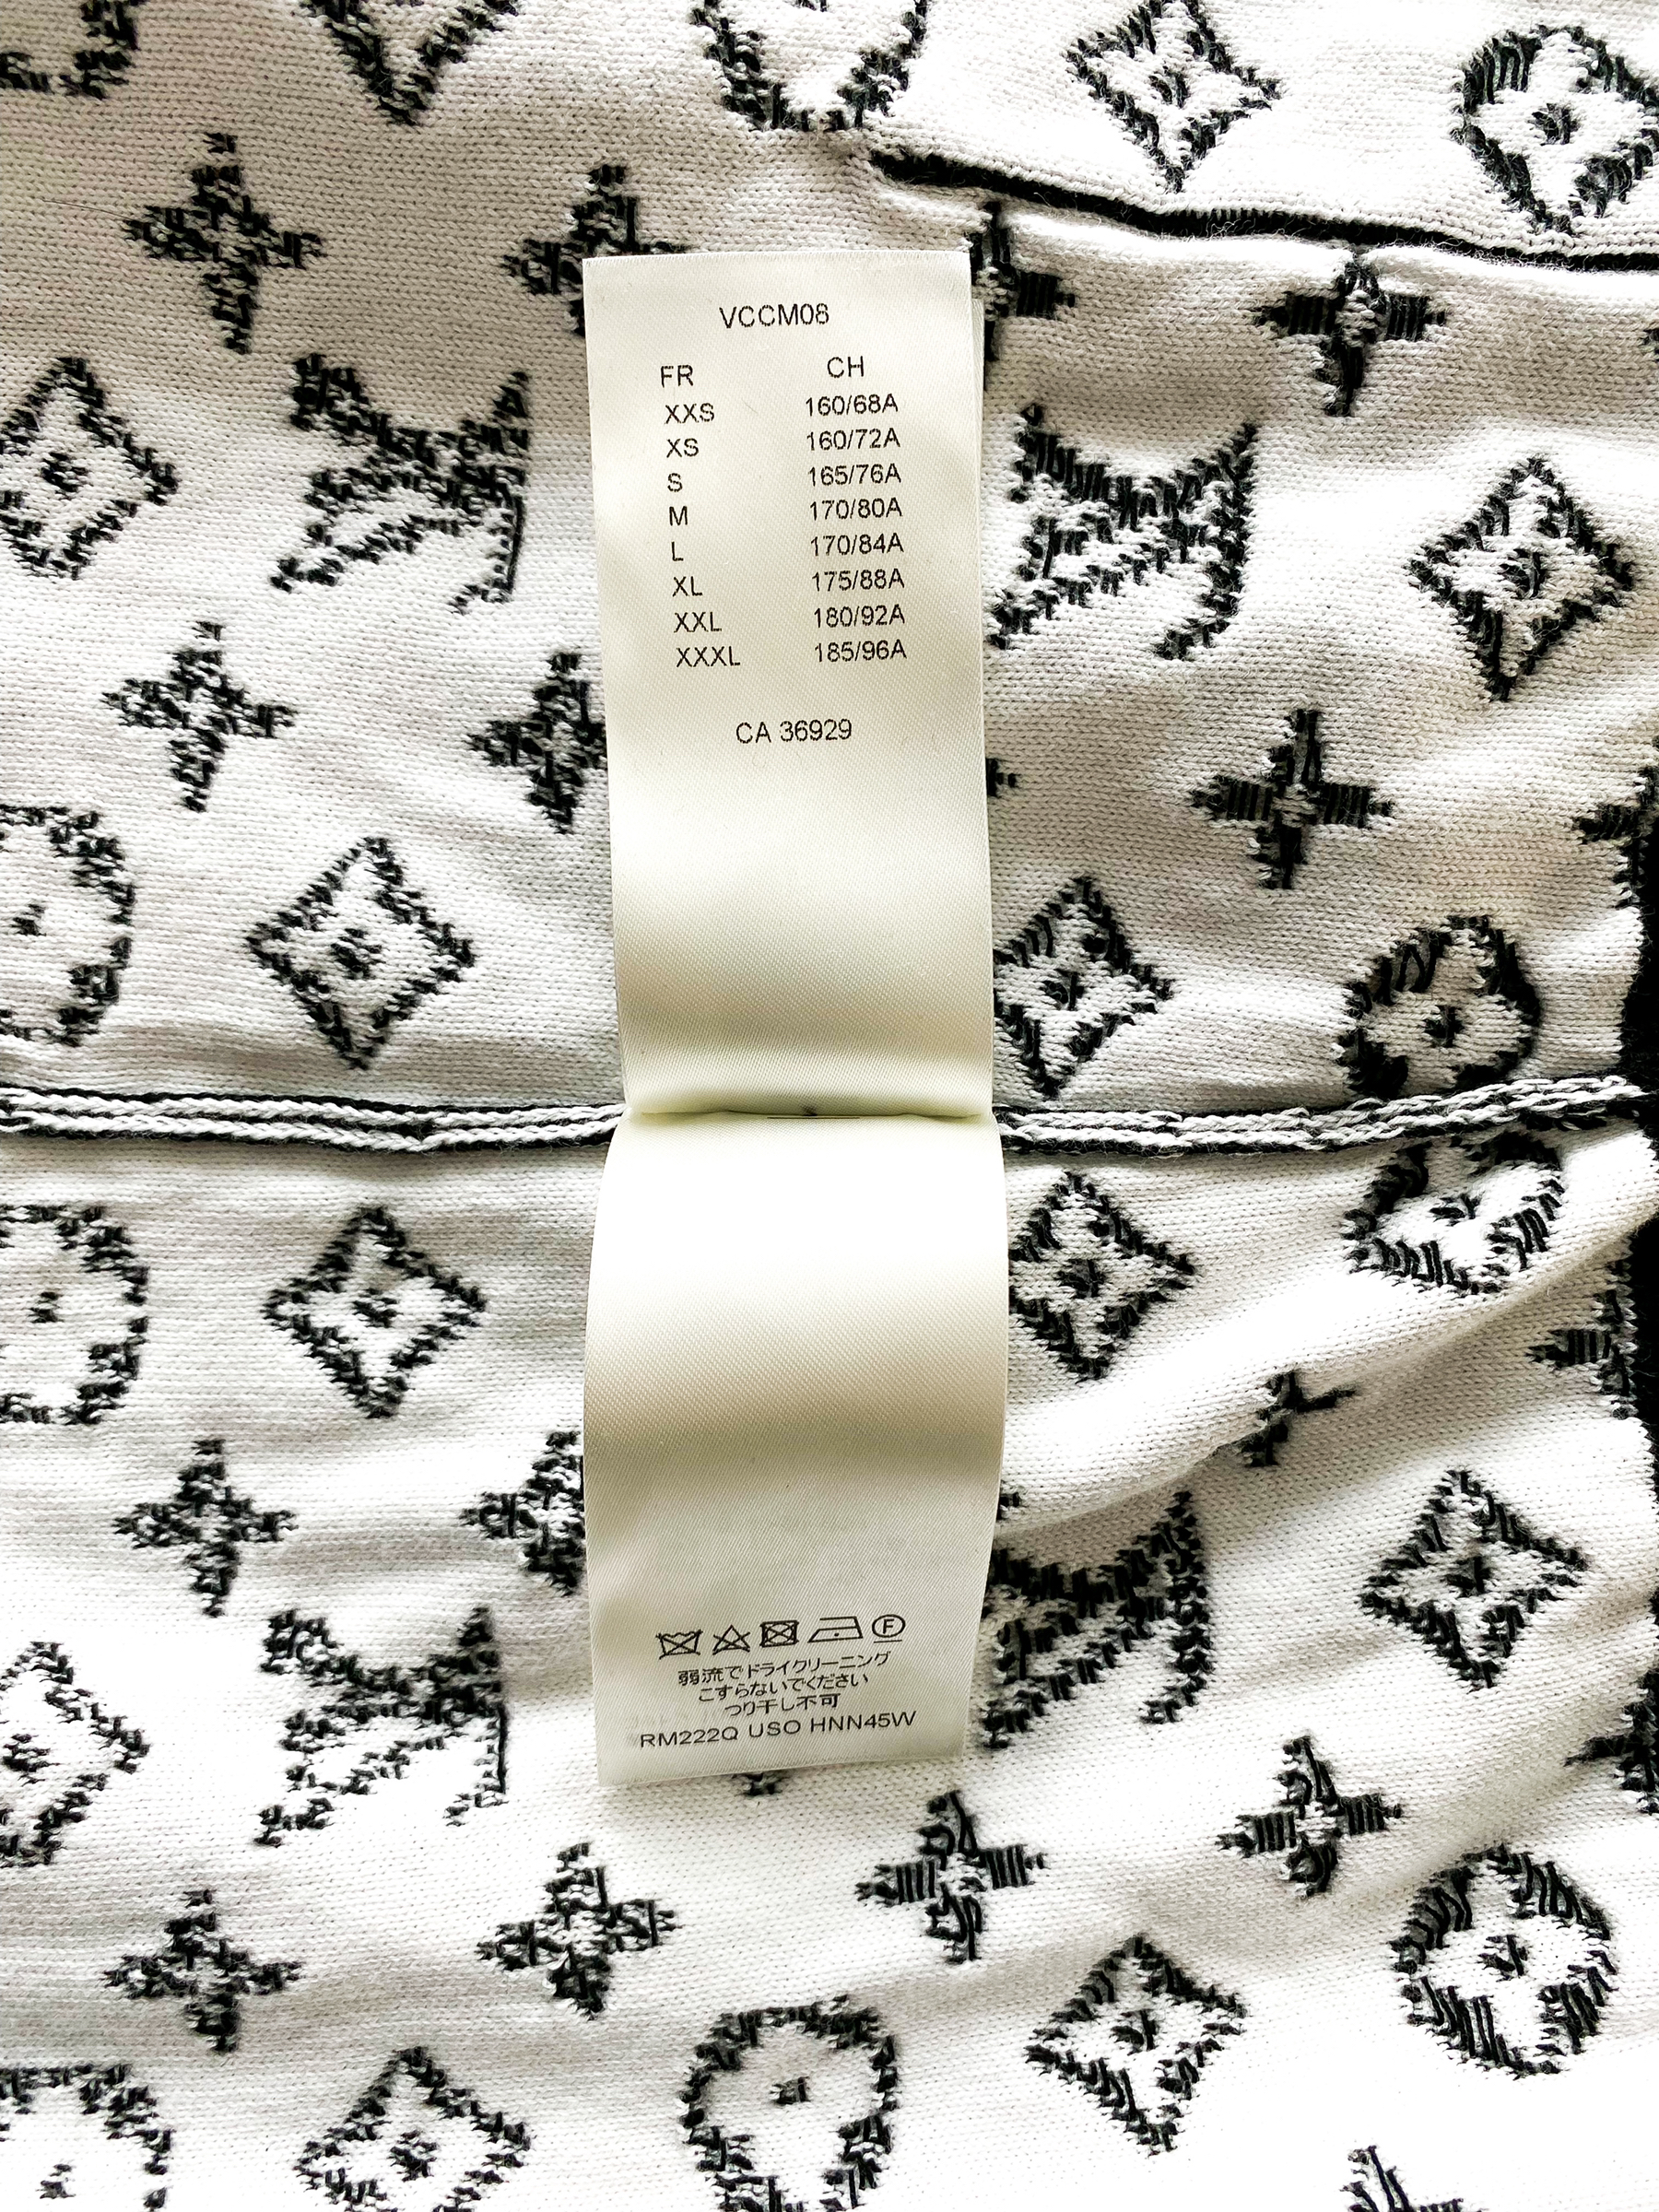 Louis Vuitton® Monogram Gradient Hoodie Black White. Size XL